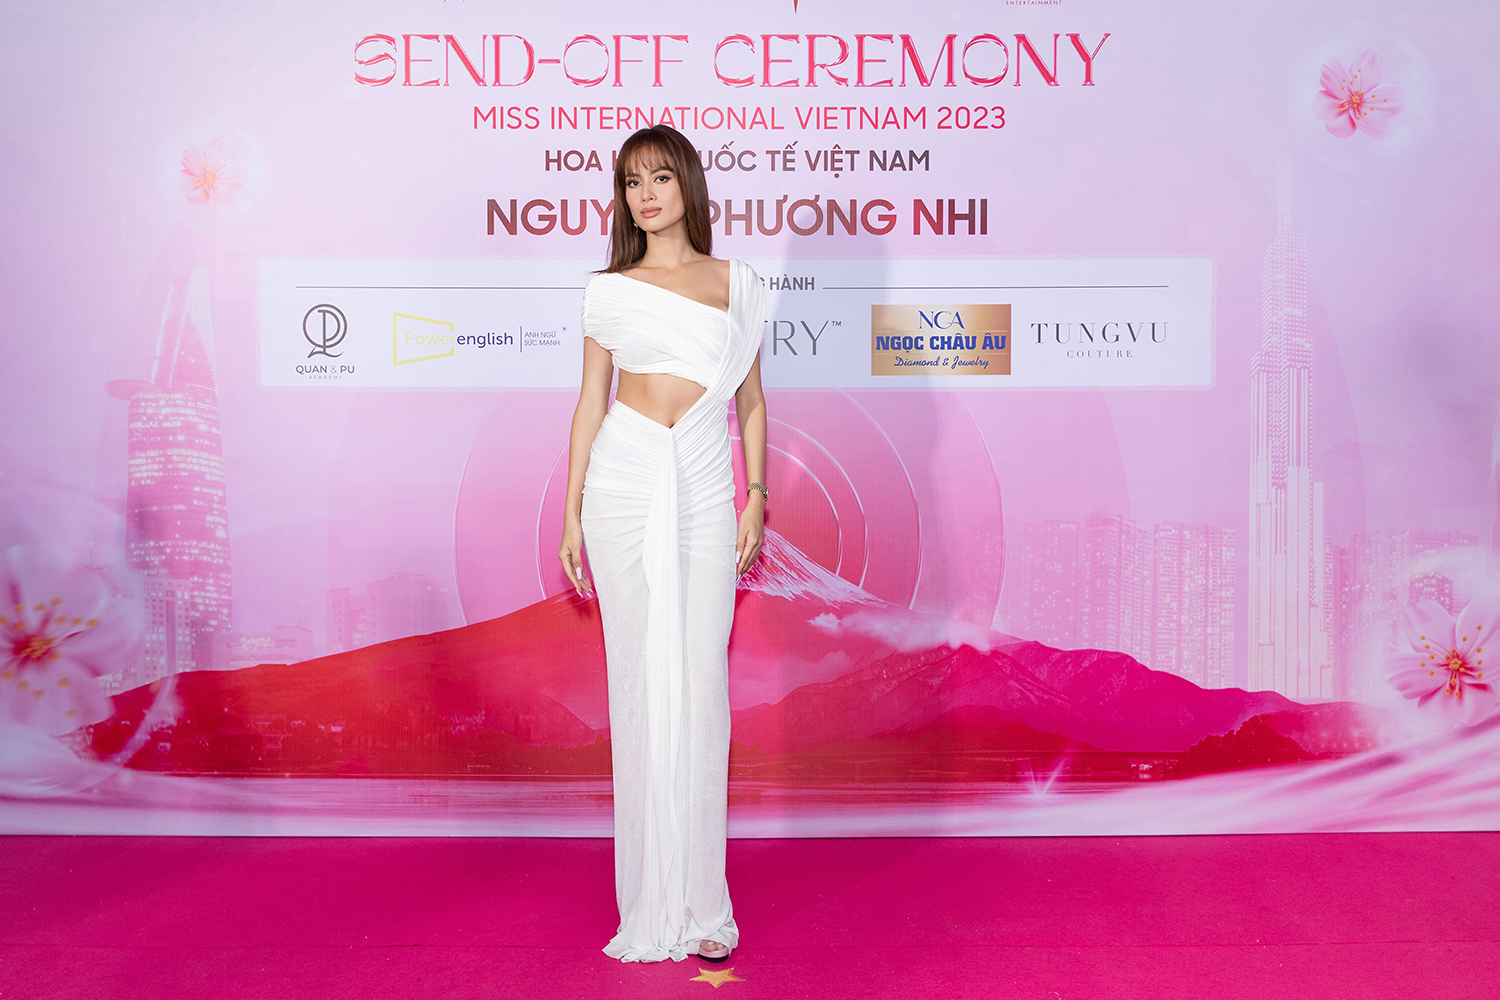 Harper's Bazaar_Miss International Việt Nam 2023 Phương Nhi_07